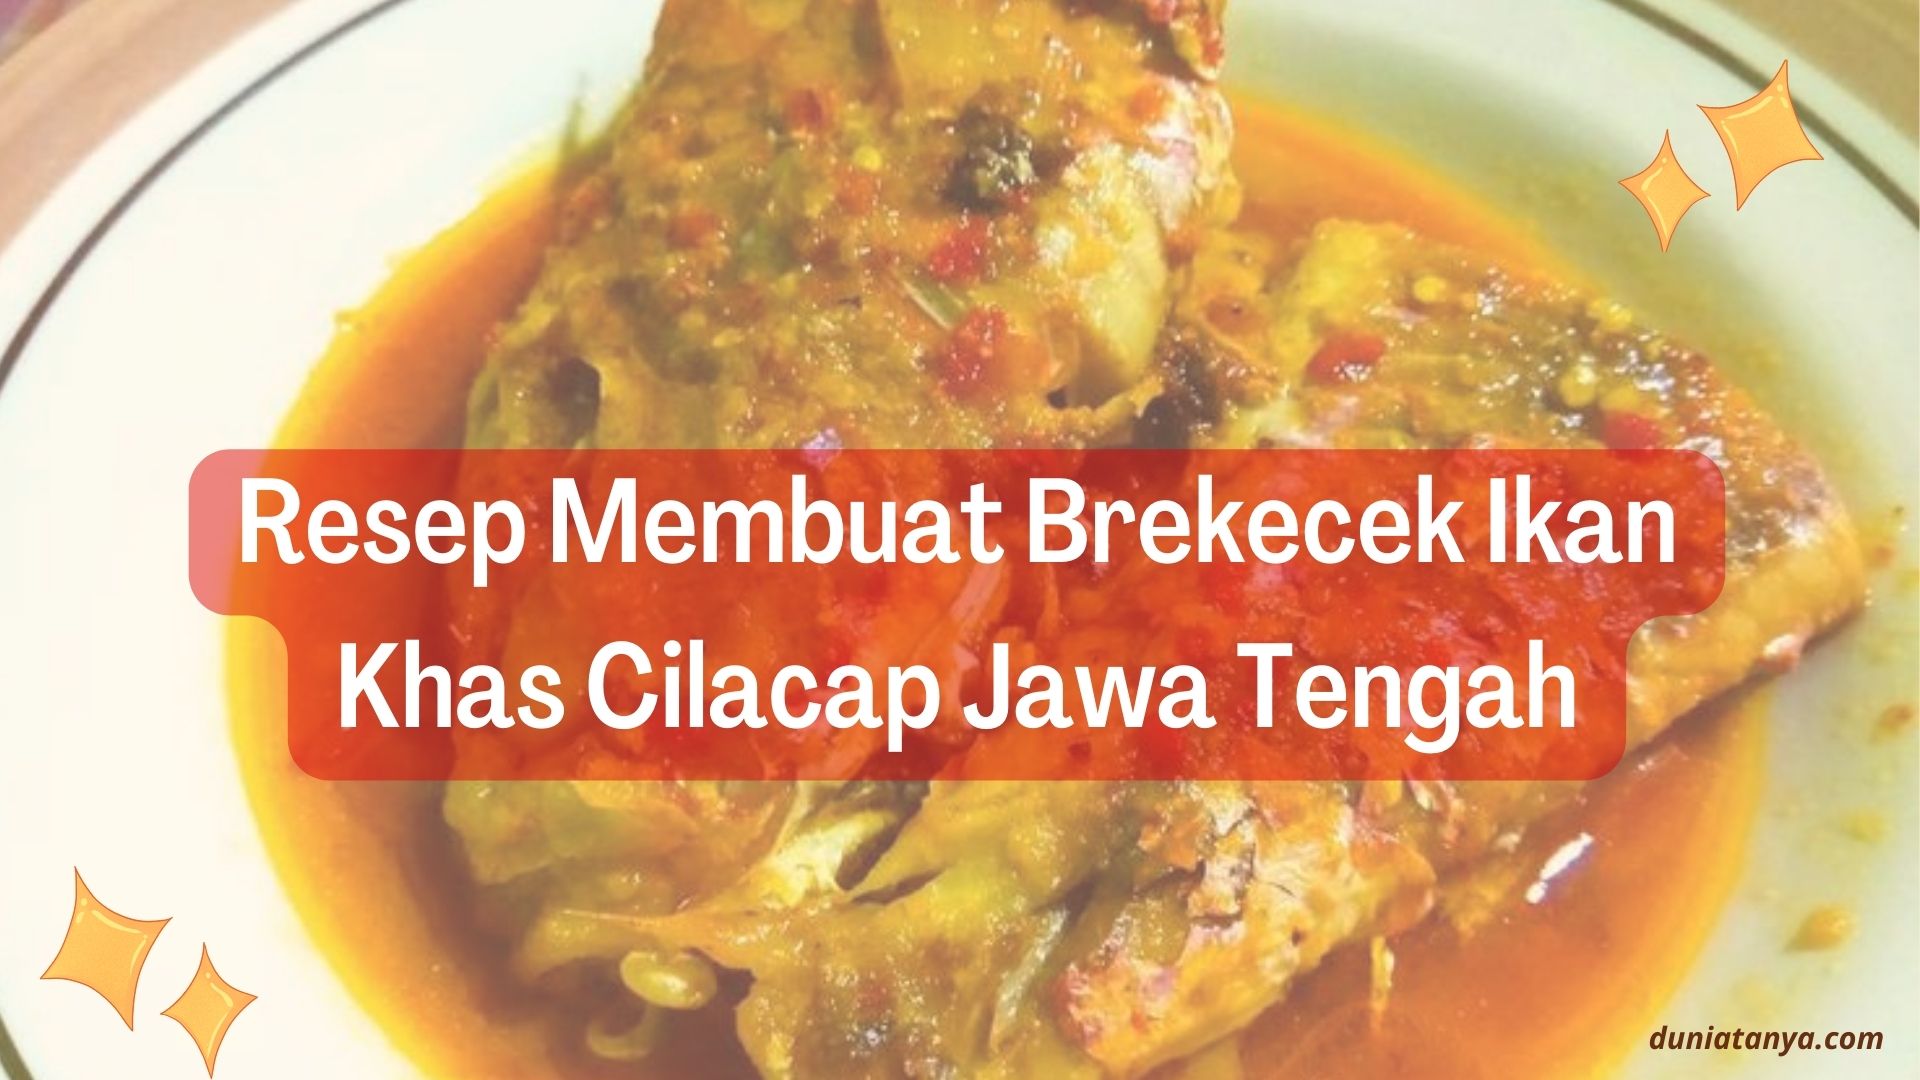 You are currently viewing Resep Membuat Brekecek Ikan Khas Cilacap Jawa Tengah